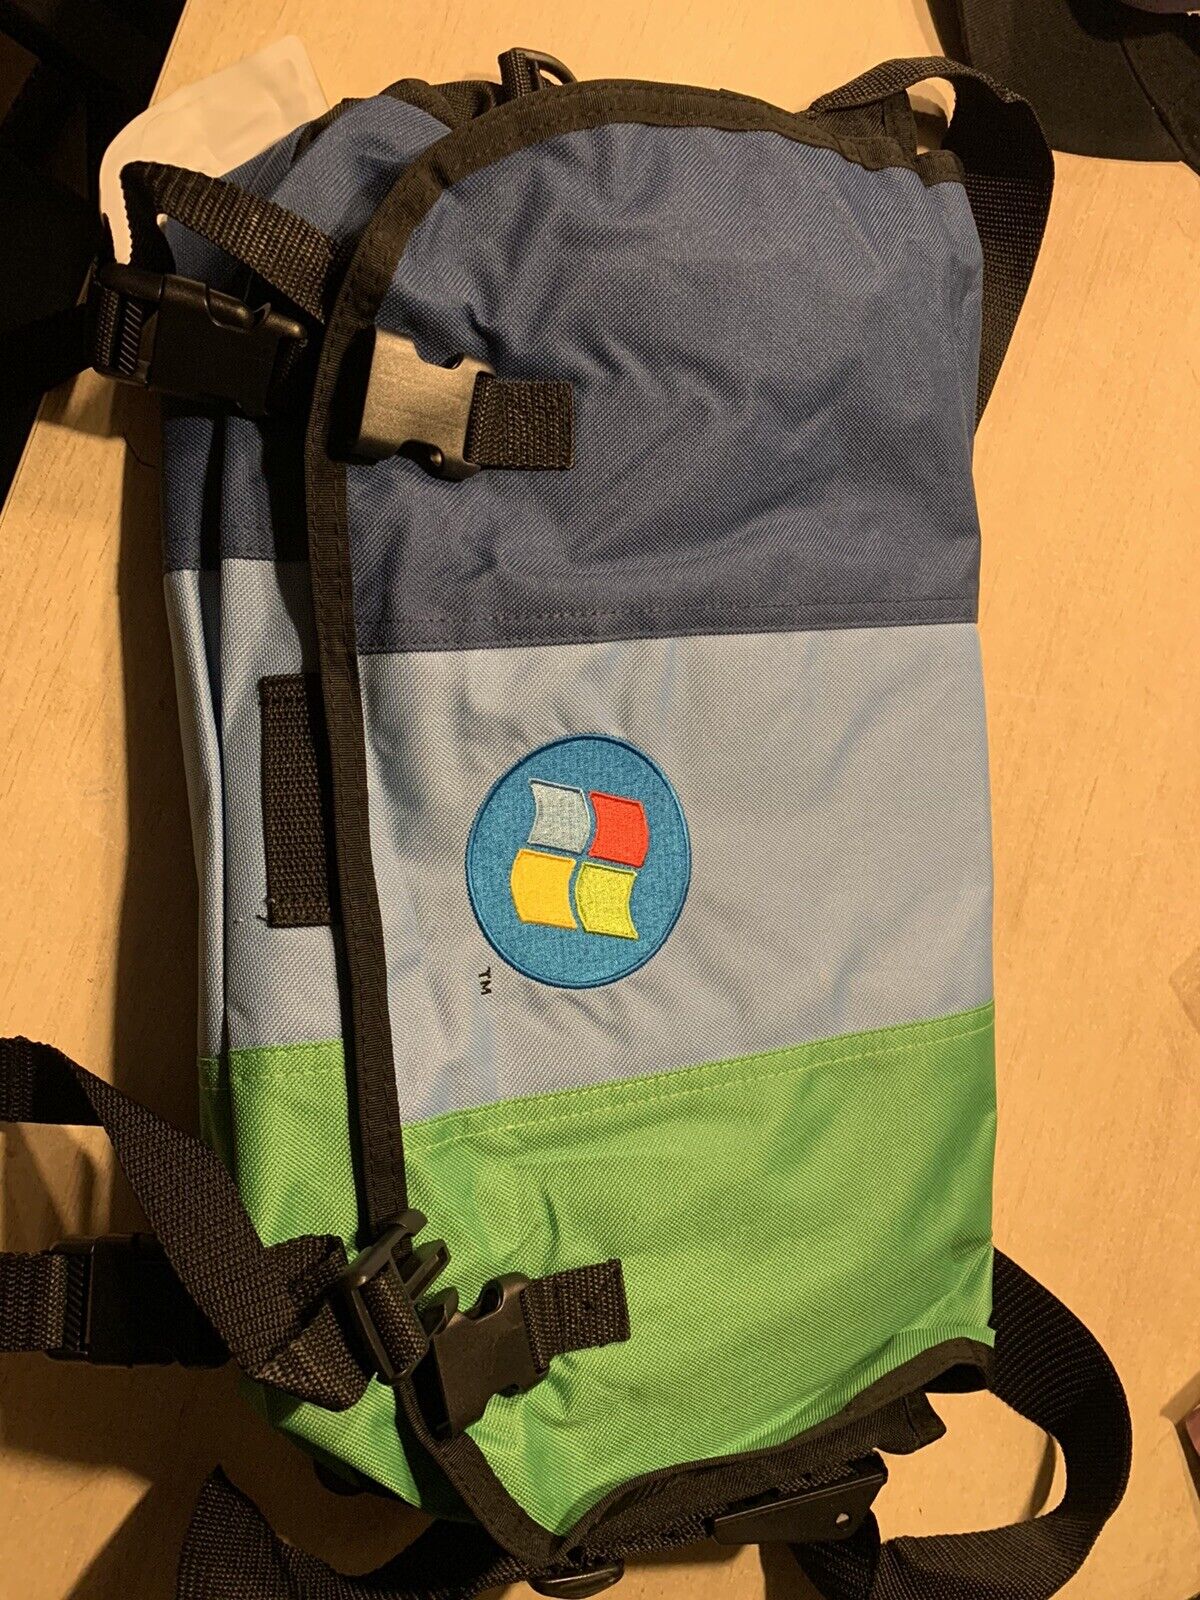 Microsoft Branded Windows Laptop Carrier Bag - Very Limited Edition New Goedkoop stevig